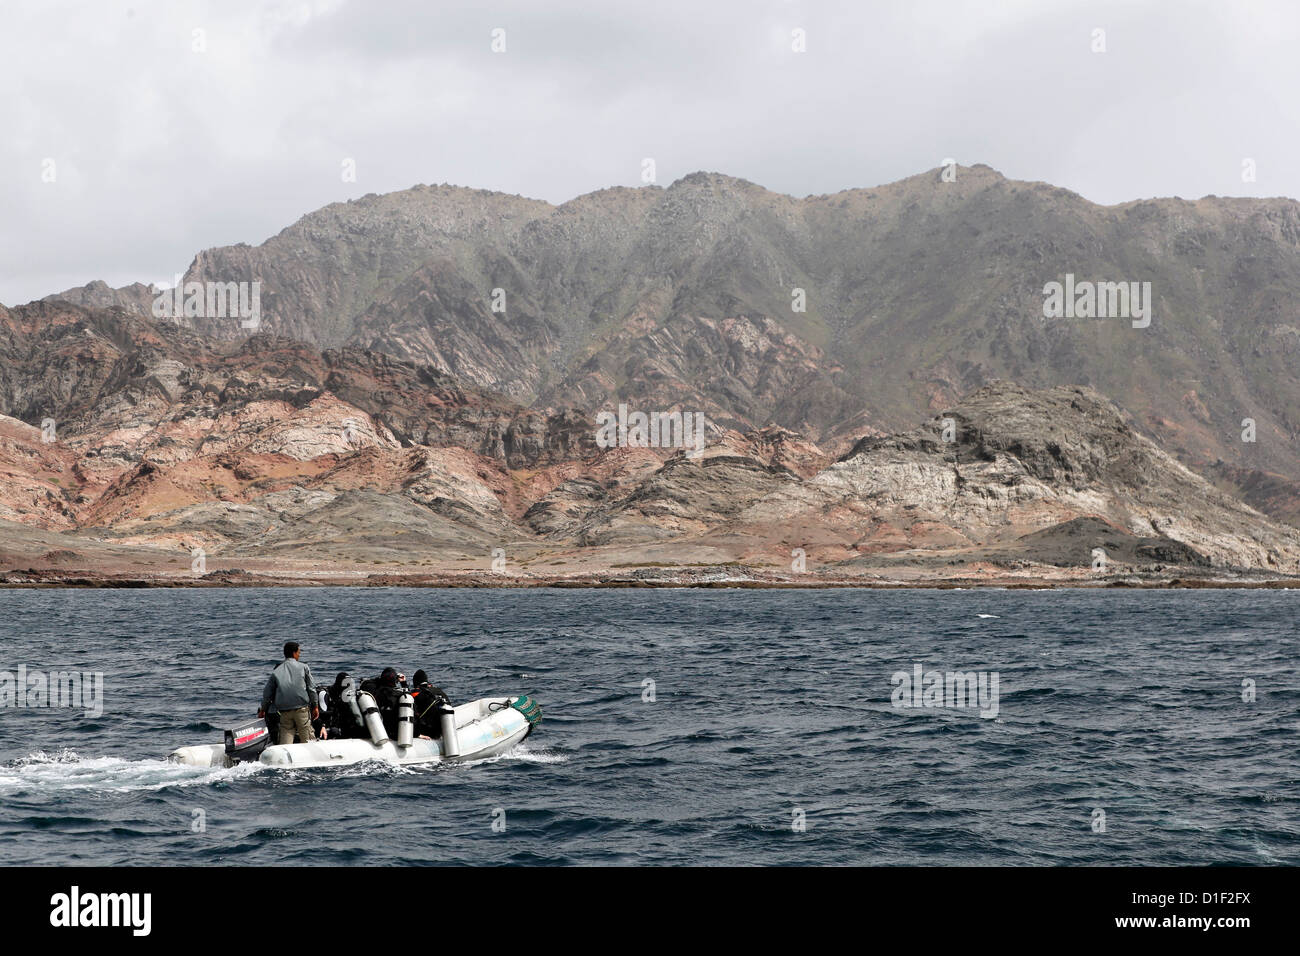 Divers on a boat, Khuriya Muriya Islands, Oman, Indian Ocean Stock Photo